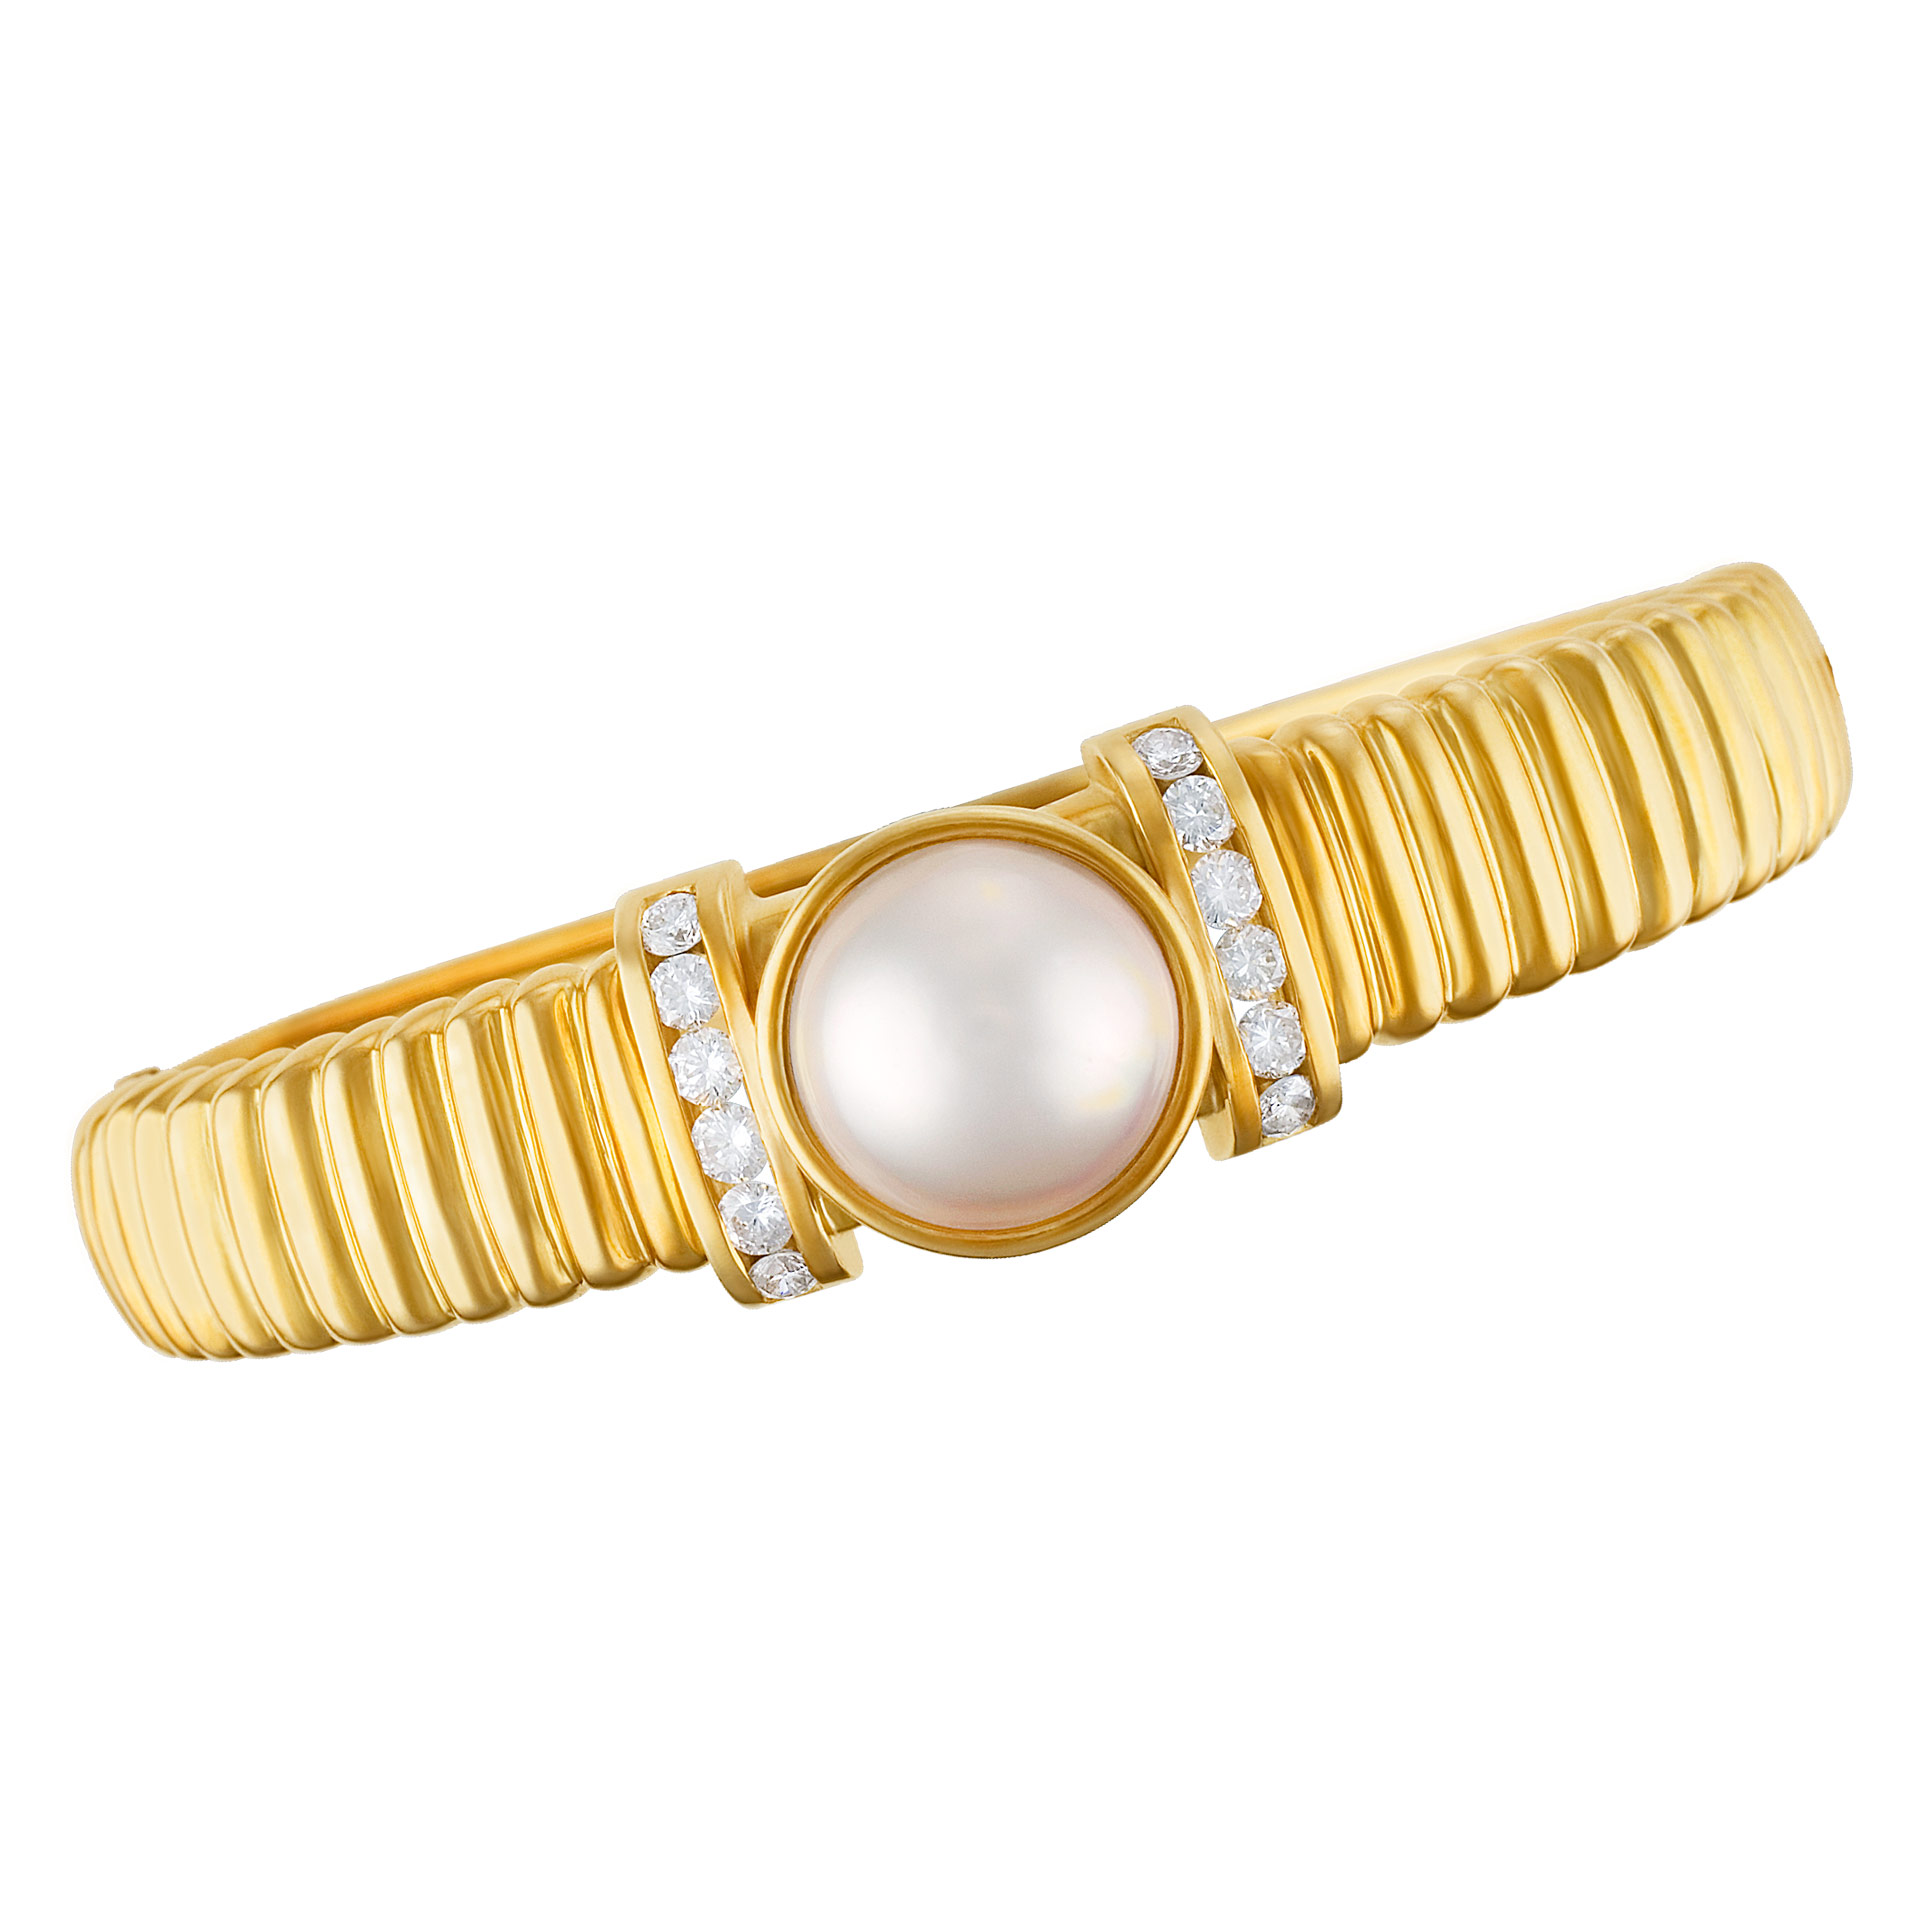 Mobe pearl and diamond bangle in 18k yellow gold. 1.00 carats in diamonds